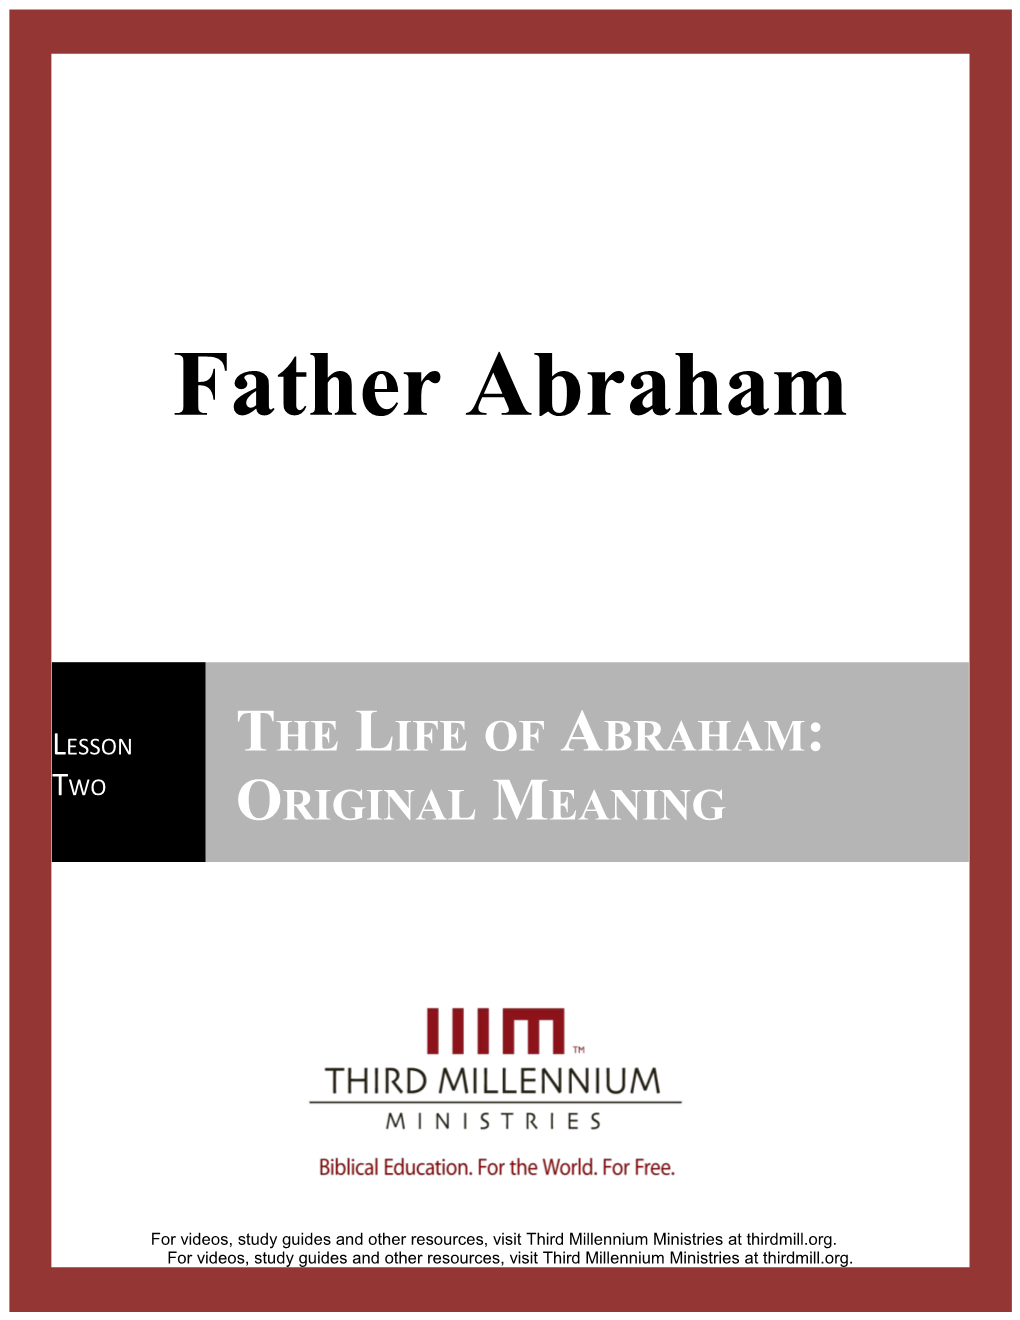 Father Abraham, Lesson 2